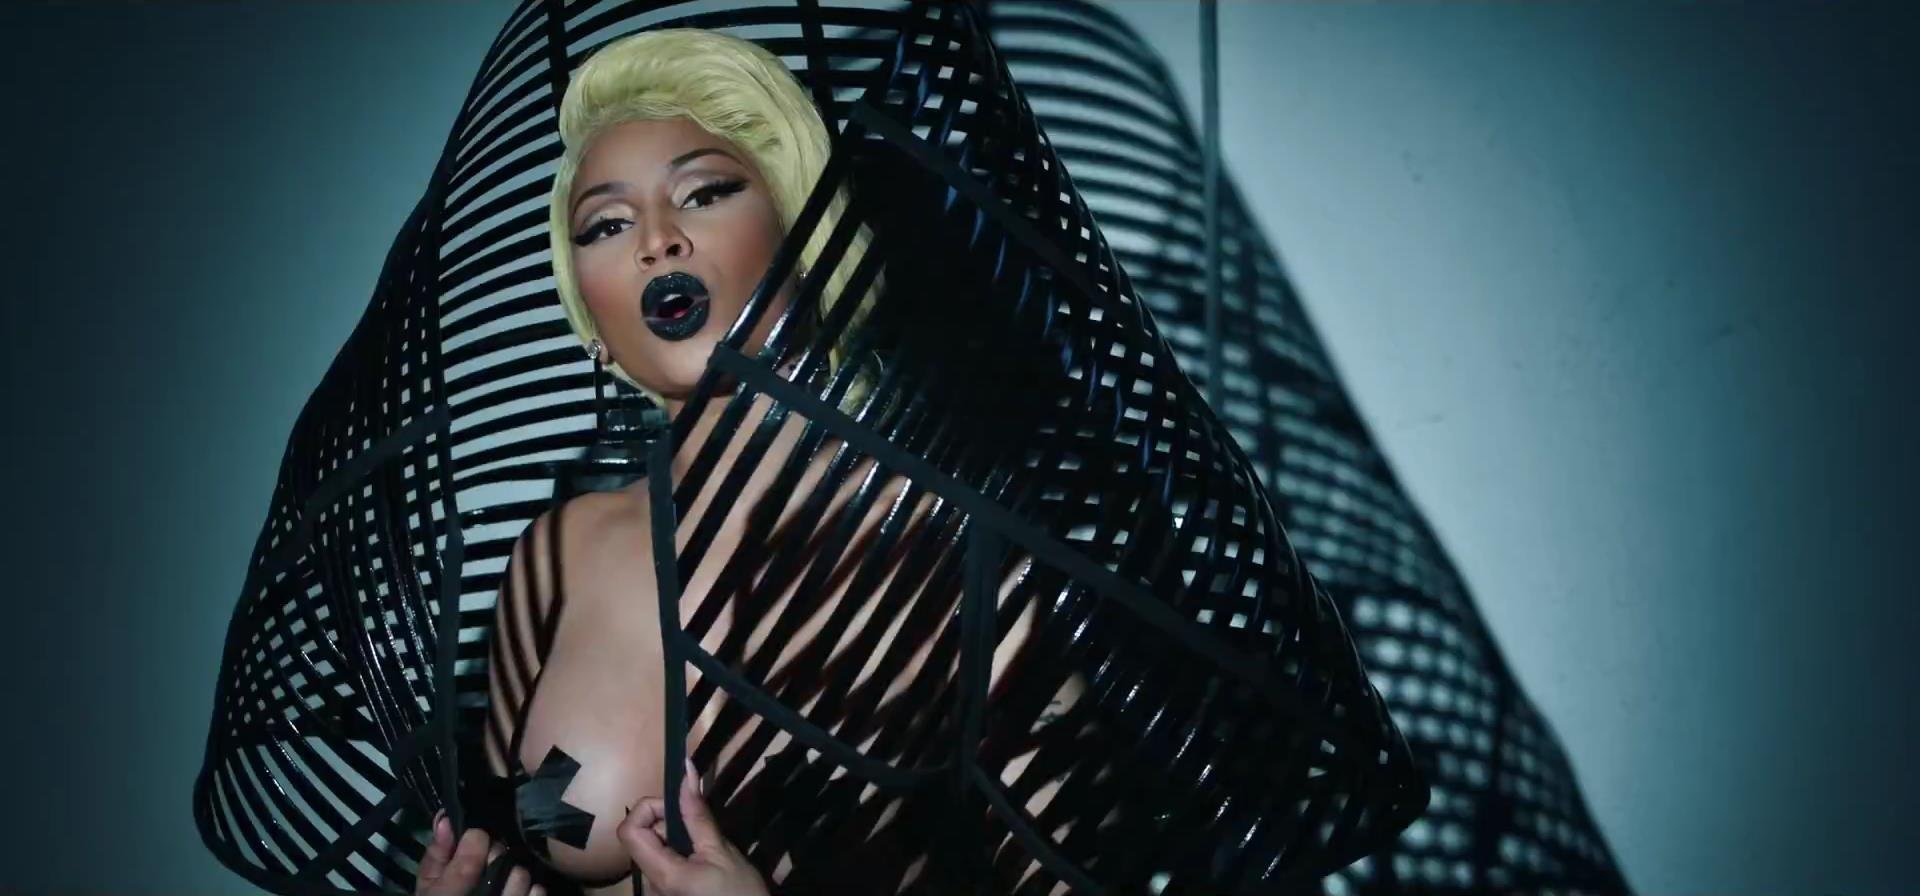 Nicki Minaj Sexy (34 Pics & Video)